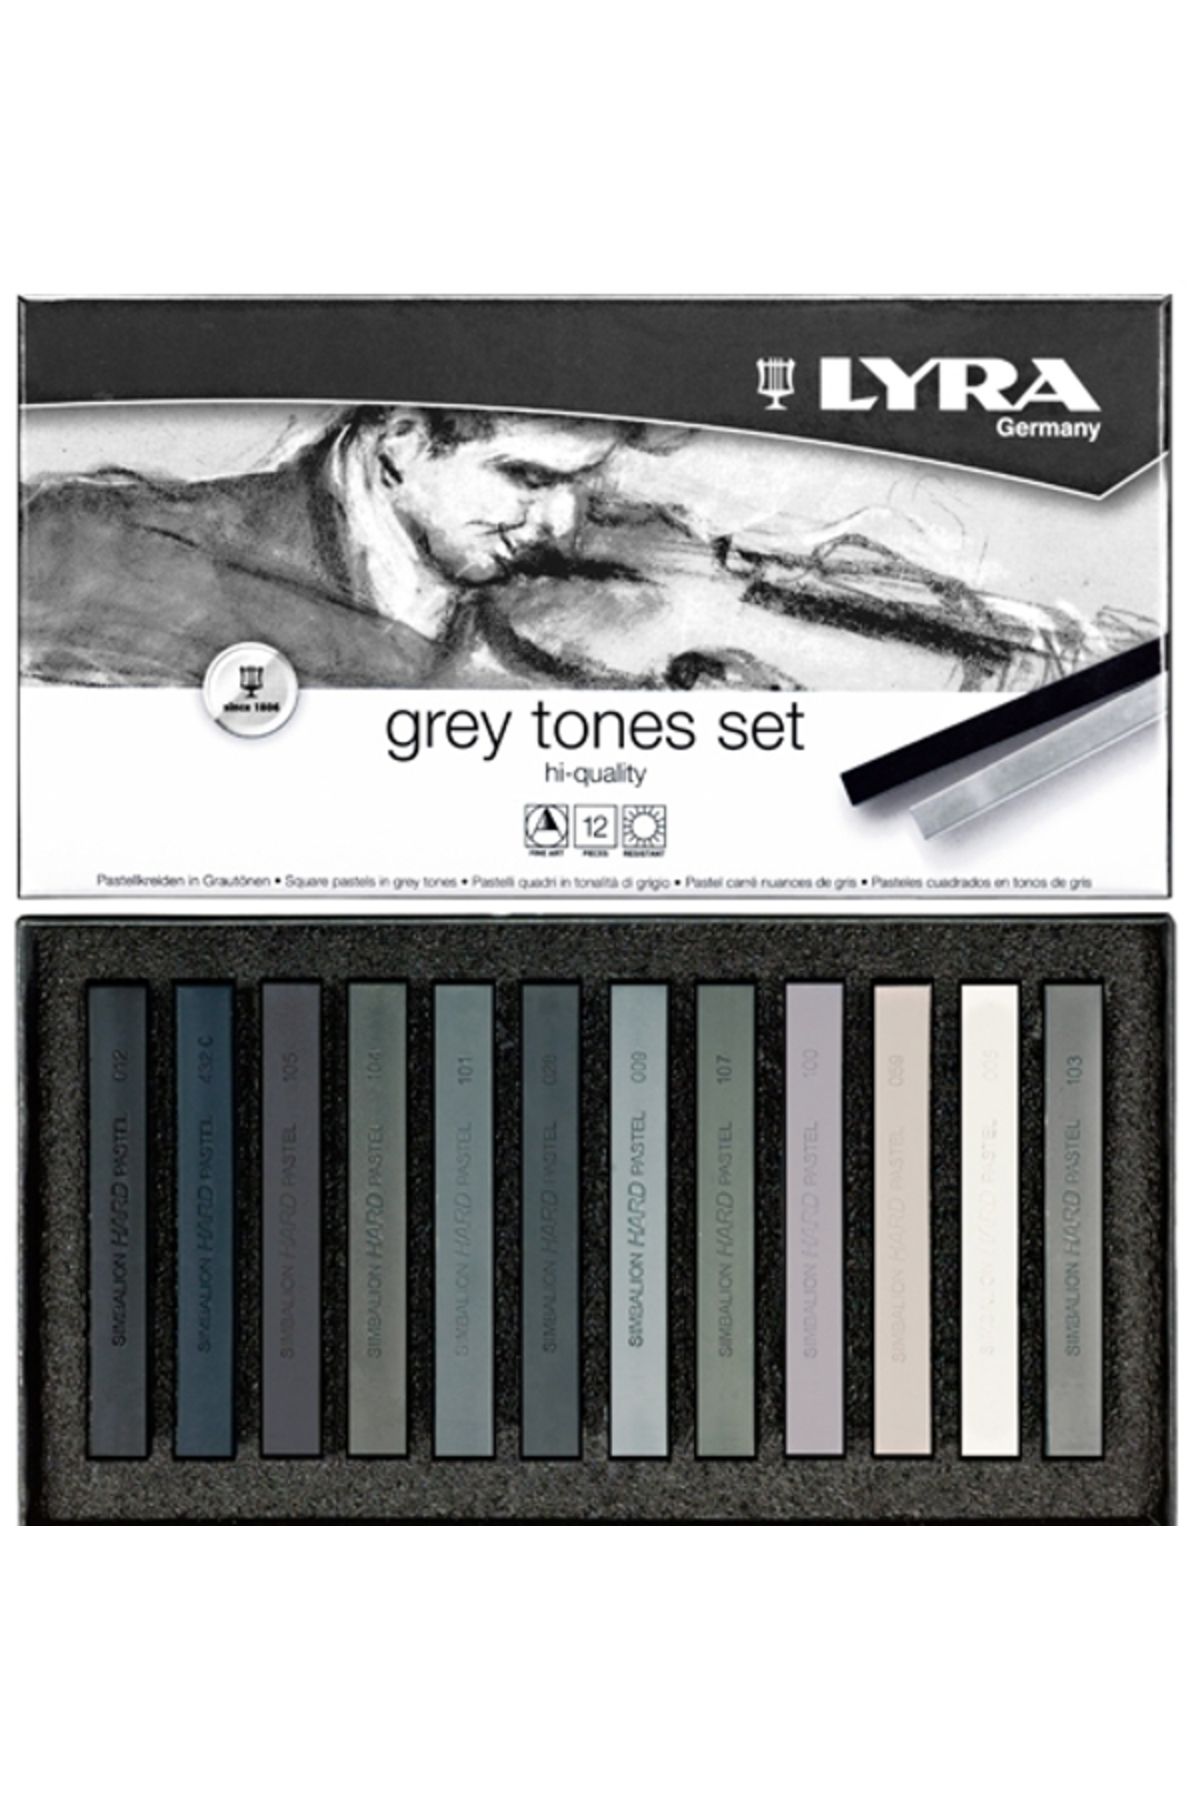 Lyra Hi-quality Gri Tonları Pastel Seti 12'li